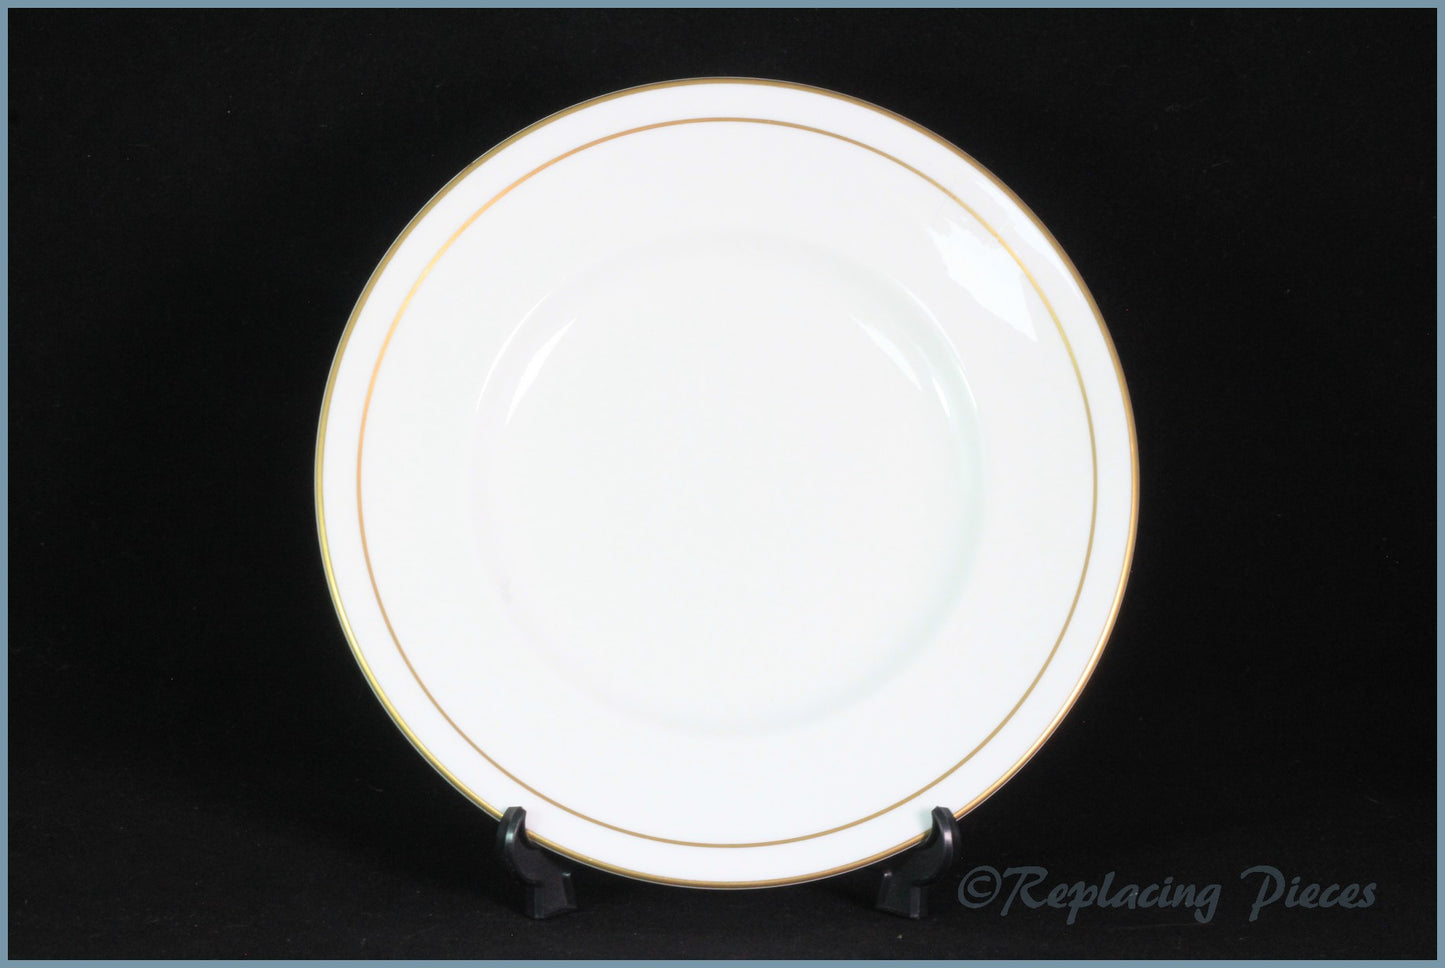 Royal Worcester - Contessa - 8" Salad Plate